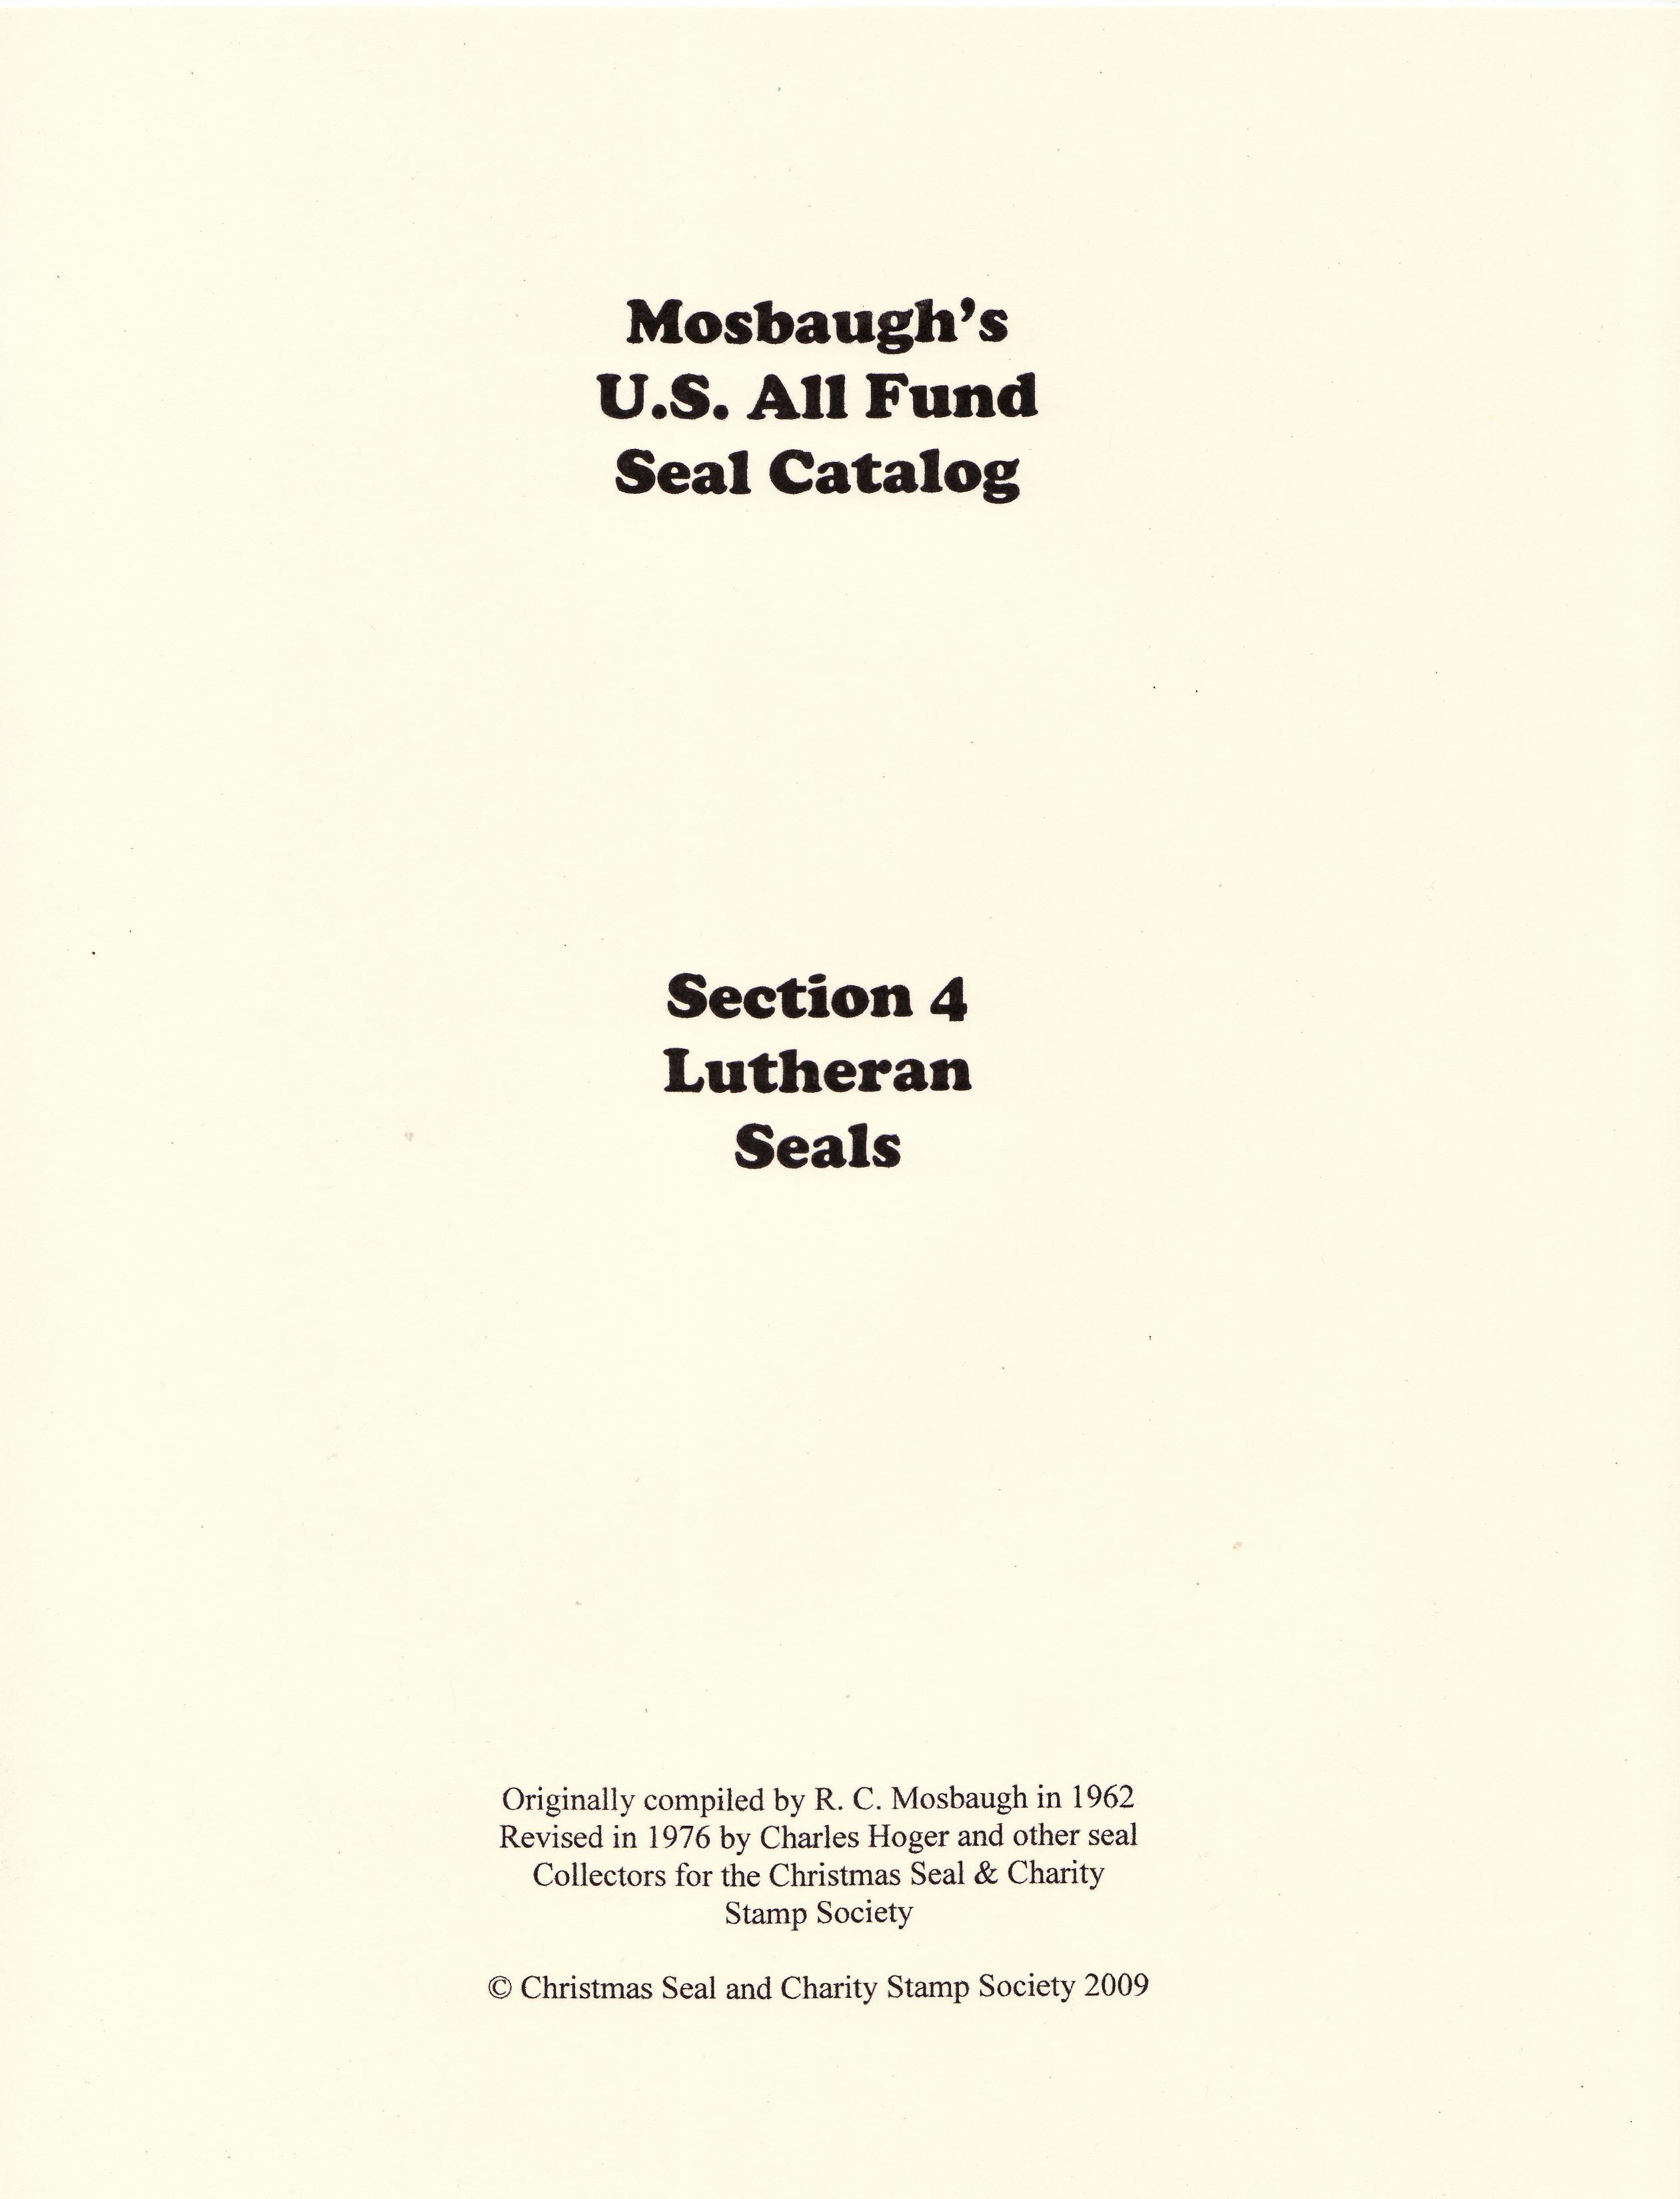 Mosbaugh's Catalog, Sec. 4, Lutheran Charity Seals, 1962 ed., Rev. 1976